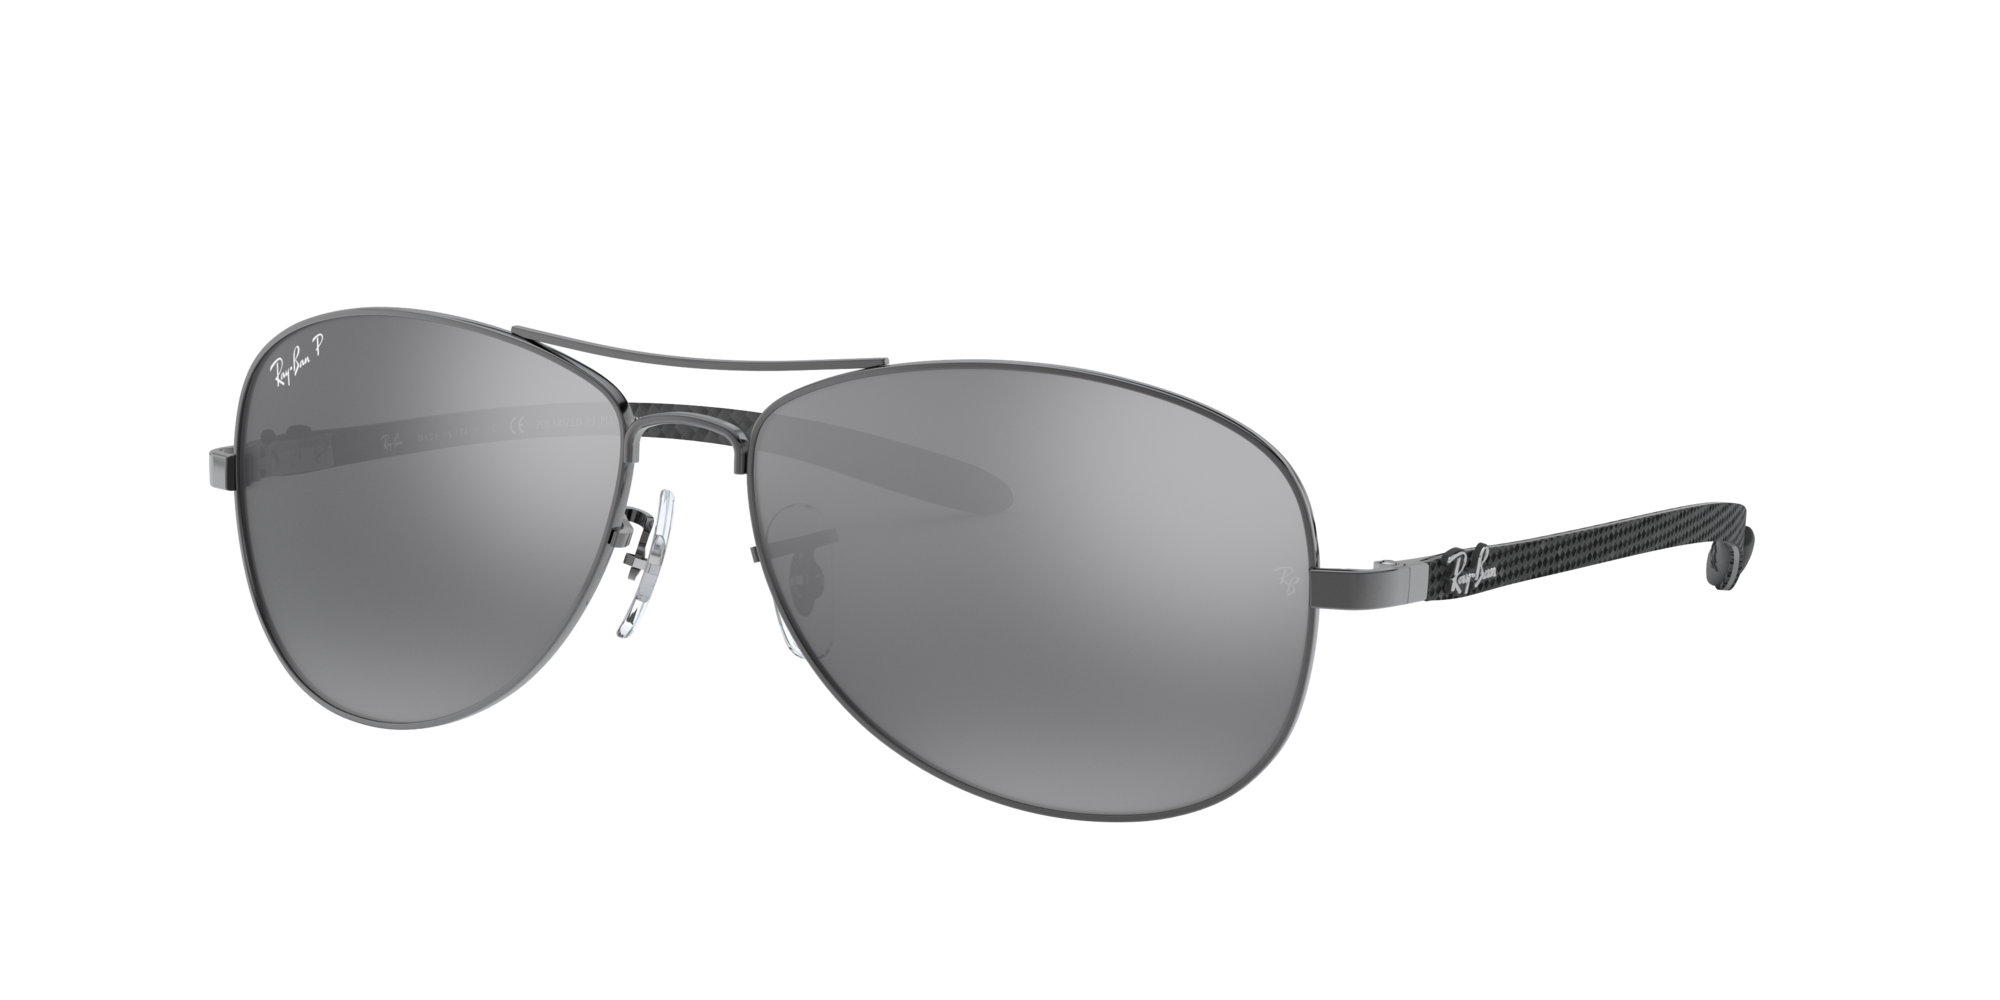 Ray-Ban 0RB8301 in Gunmetal Sunglasses 